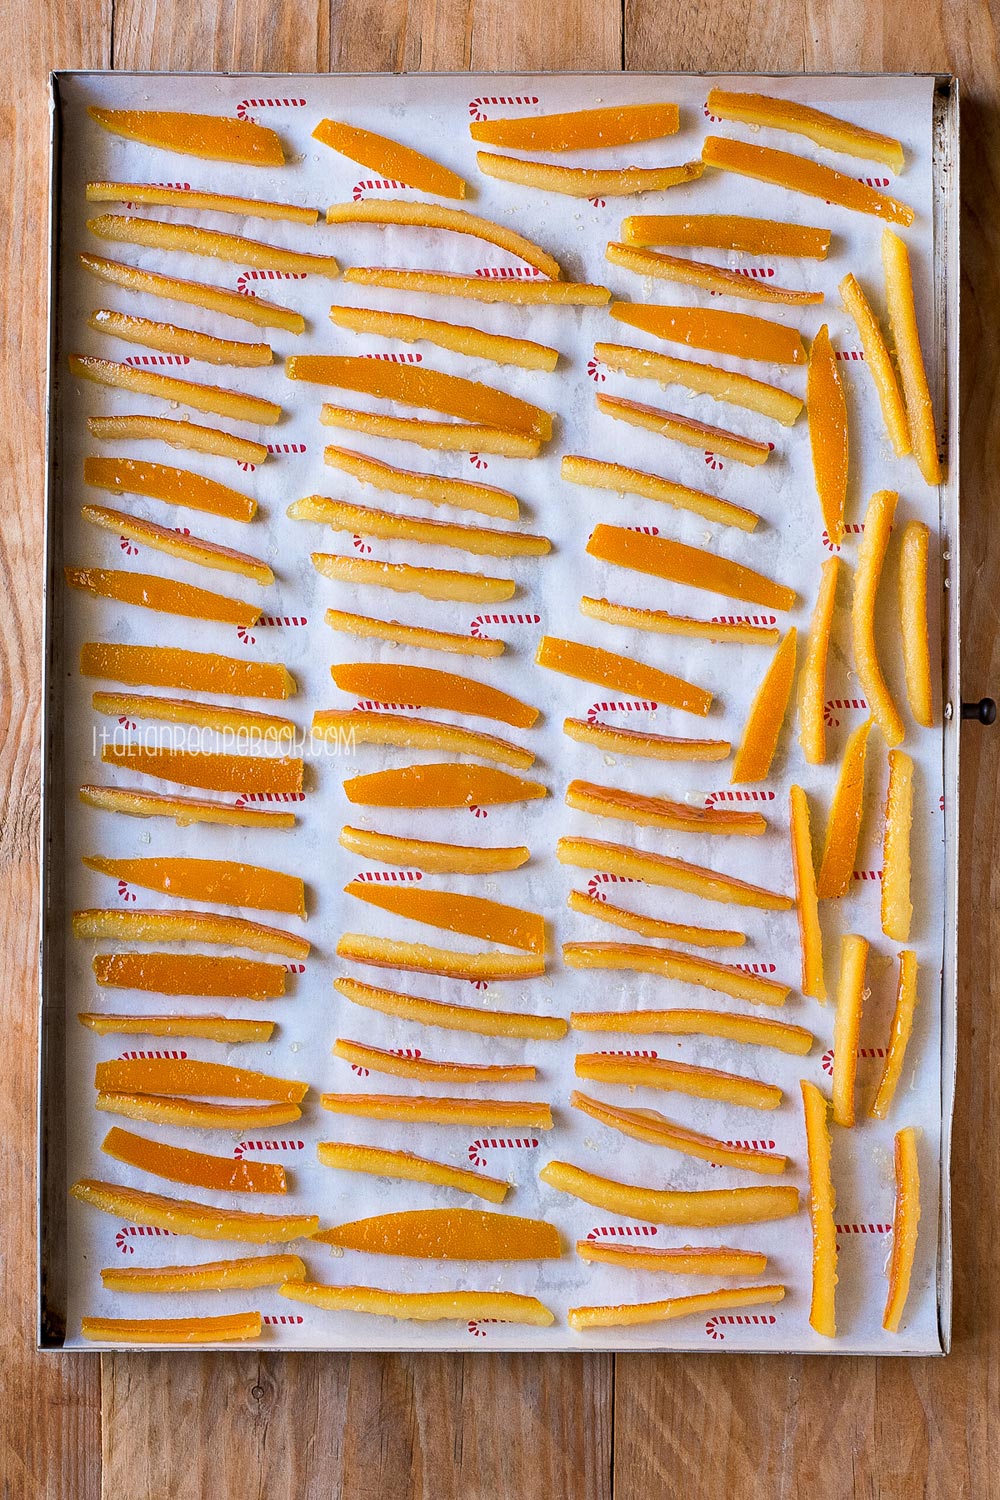 candied orange peels arranged on a tray